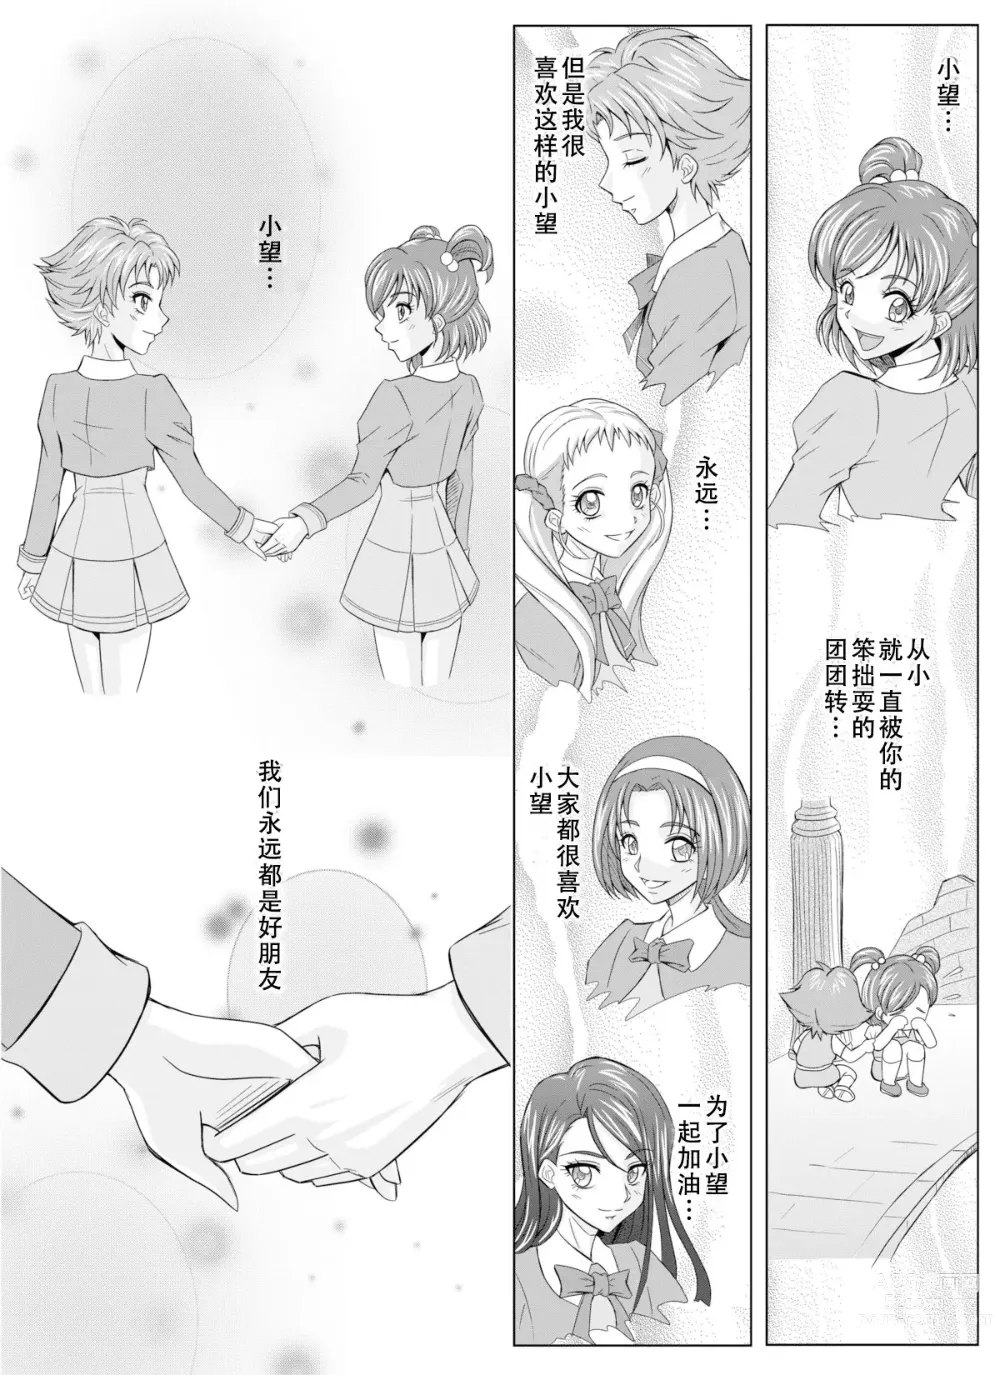 Page 2 of doujinshi Mou Hitotsu no Ketsumatsu ~Henshin Heroine Kairaku Sennou Yes!! Precure 5 Hen~ 另一个结局 变身女英雄快乐洗脑 yes!! 光之美少女5篇 第二话